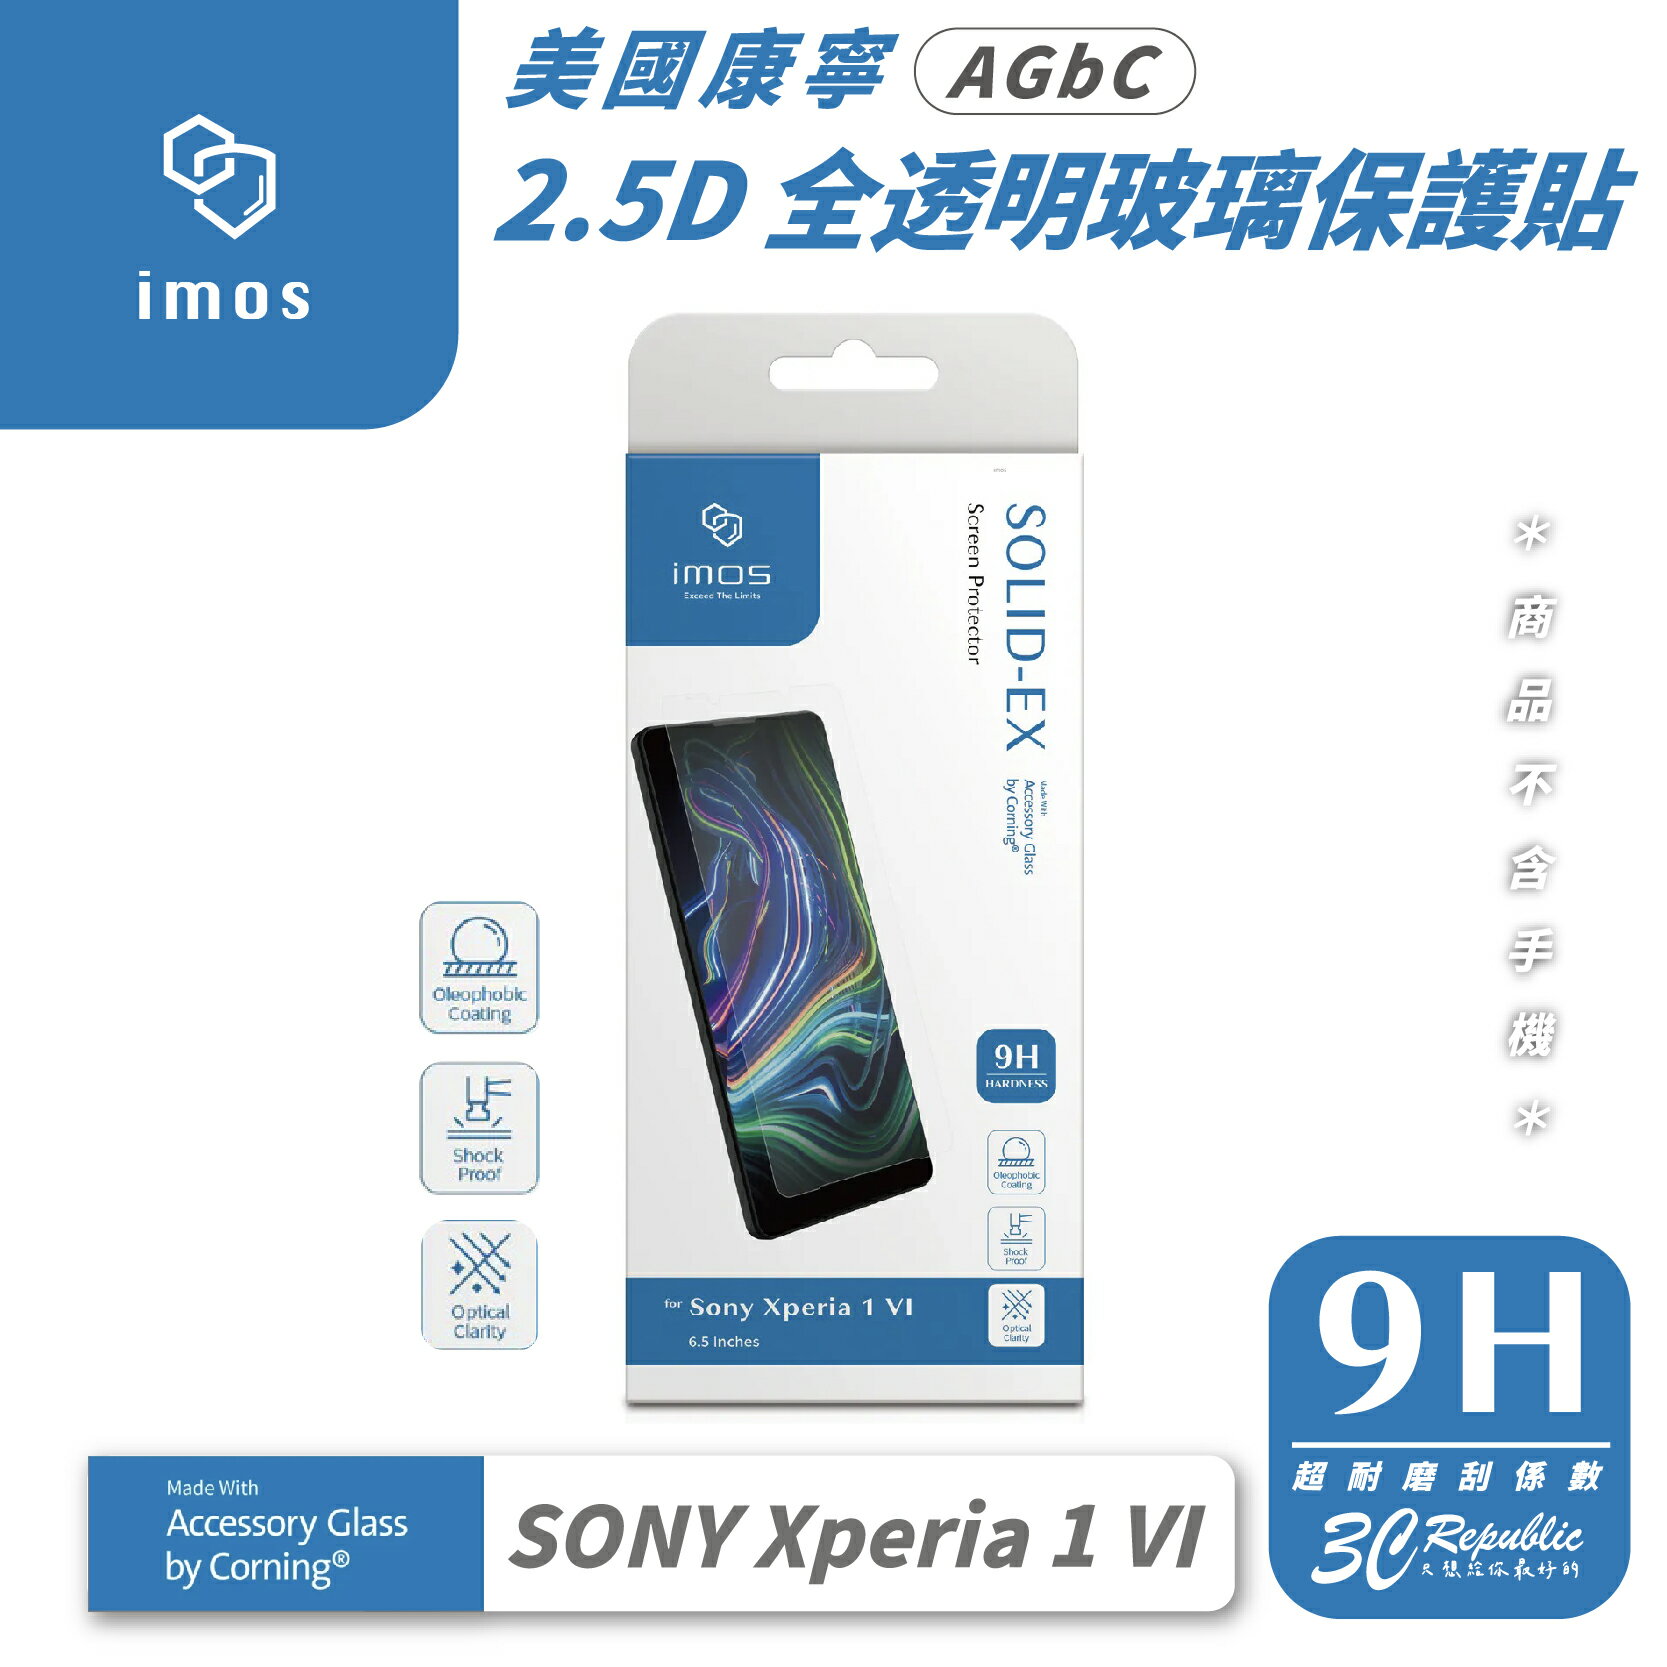 iMos 2.5D 9H 全透明 玻璃貼 保護貼 螢幕貼 美國康寧 適 SONY Xperia 1 VI